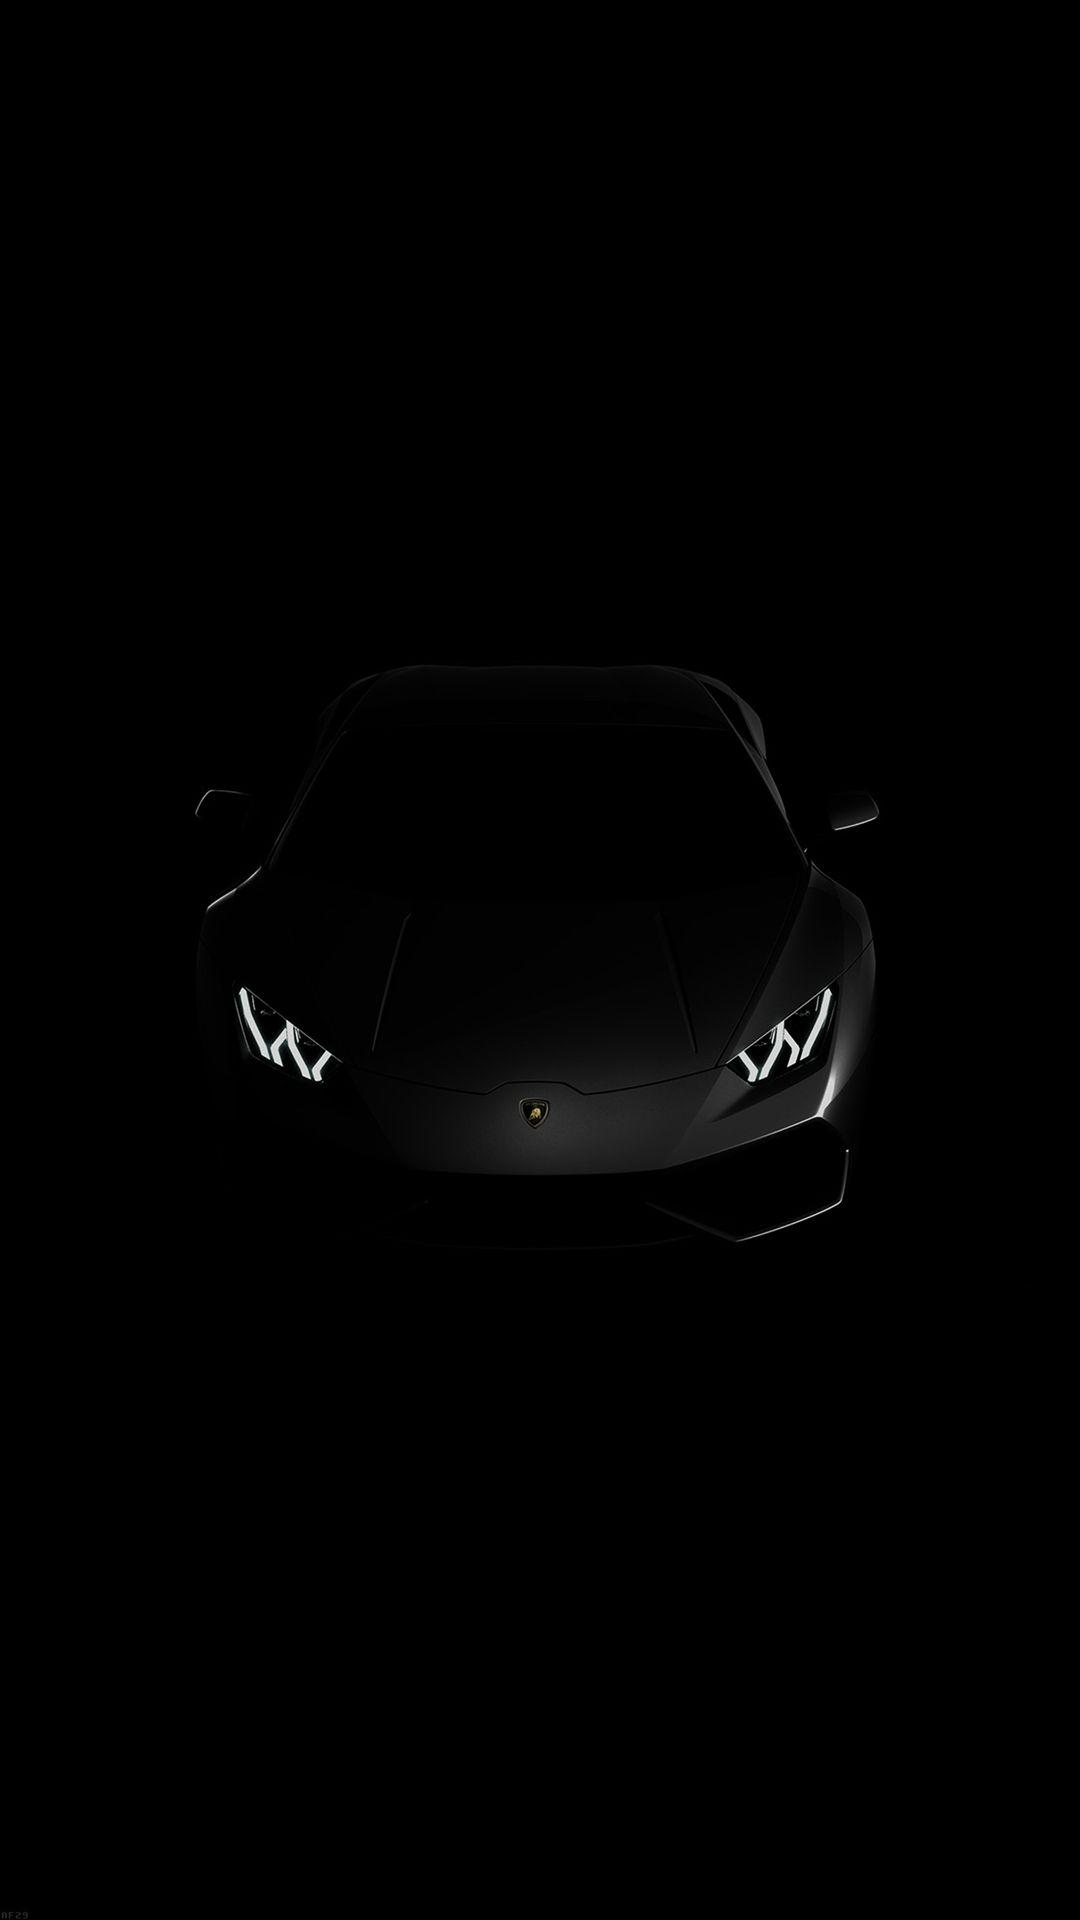 Lamborghini Huracan Lp Black Dark #iPhone #wallpaper. iPhone 8